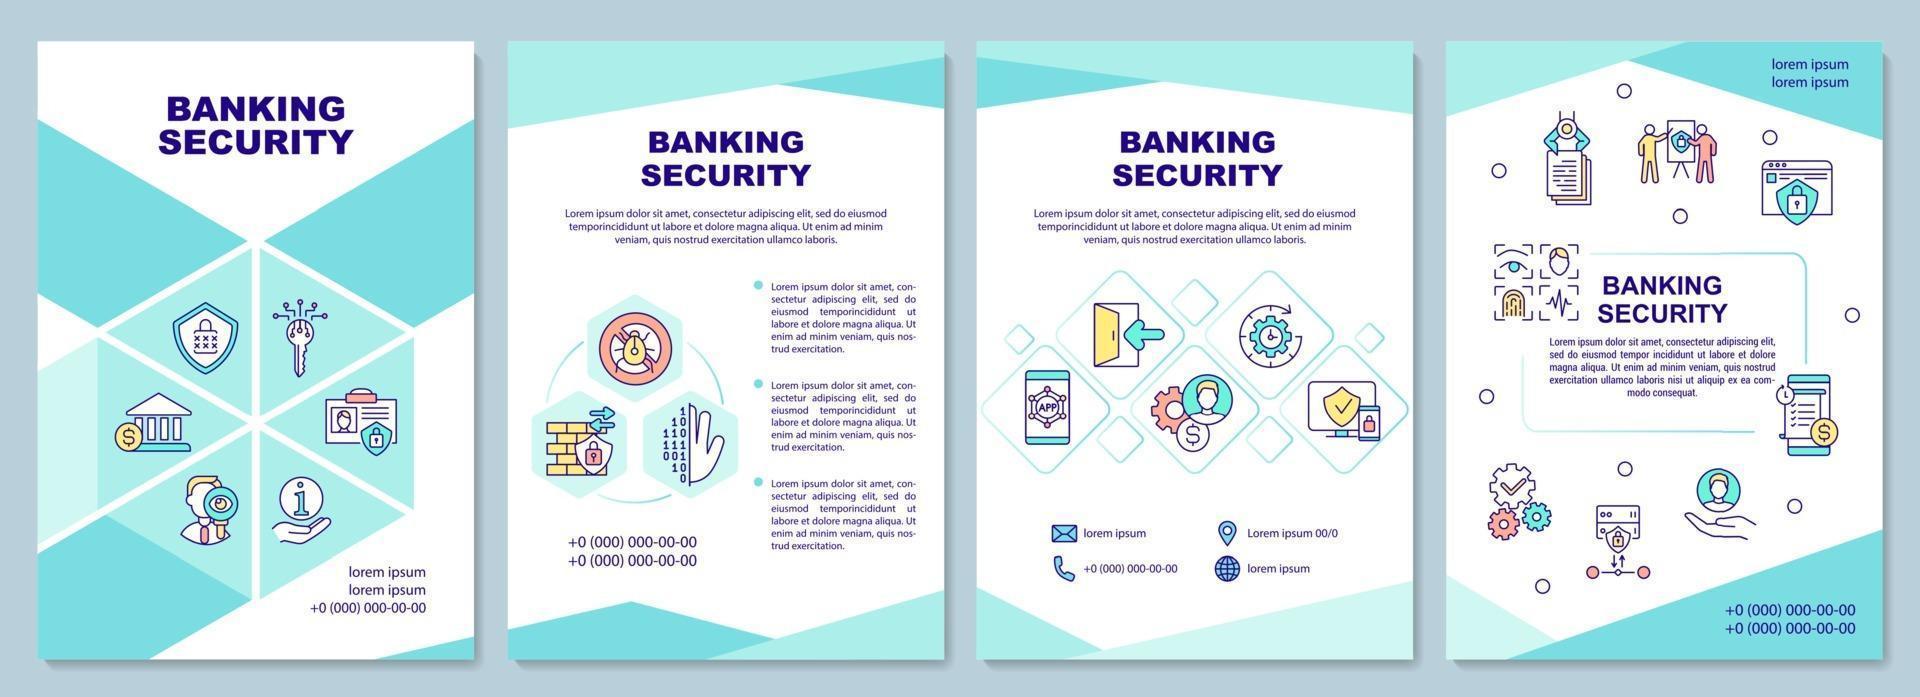 Banking security brochure template vector